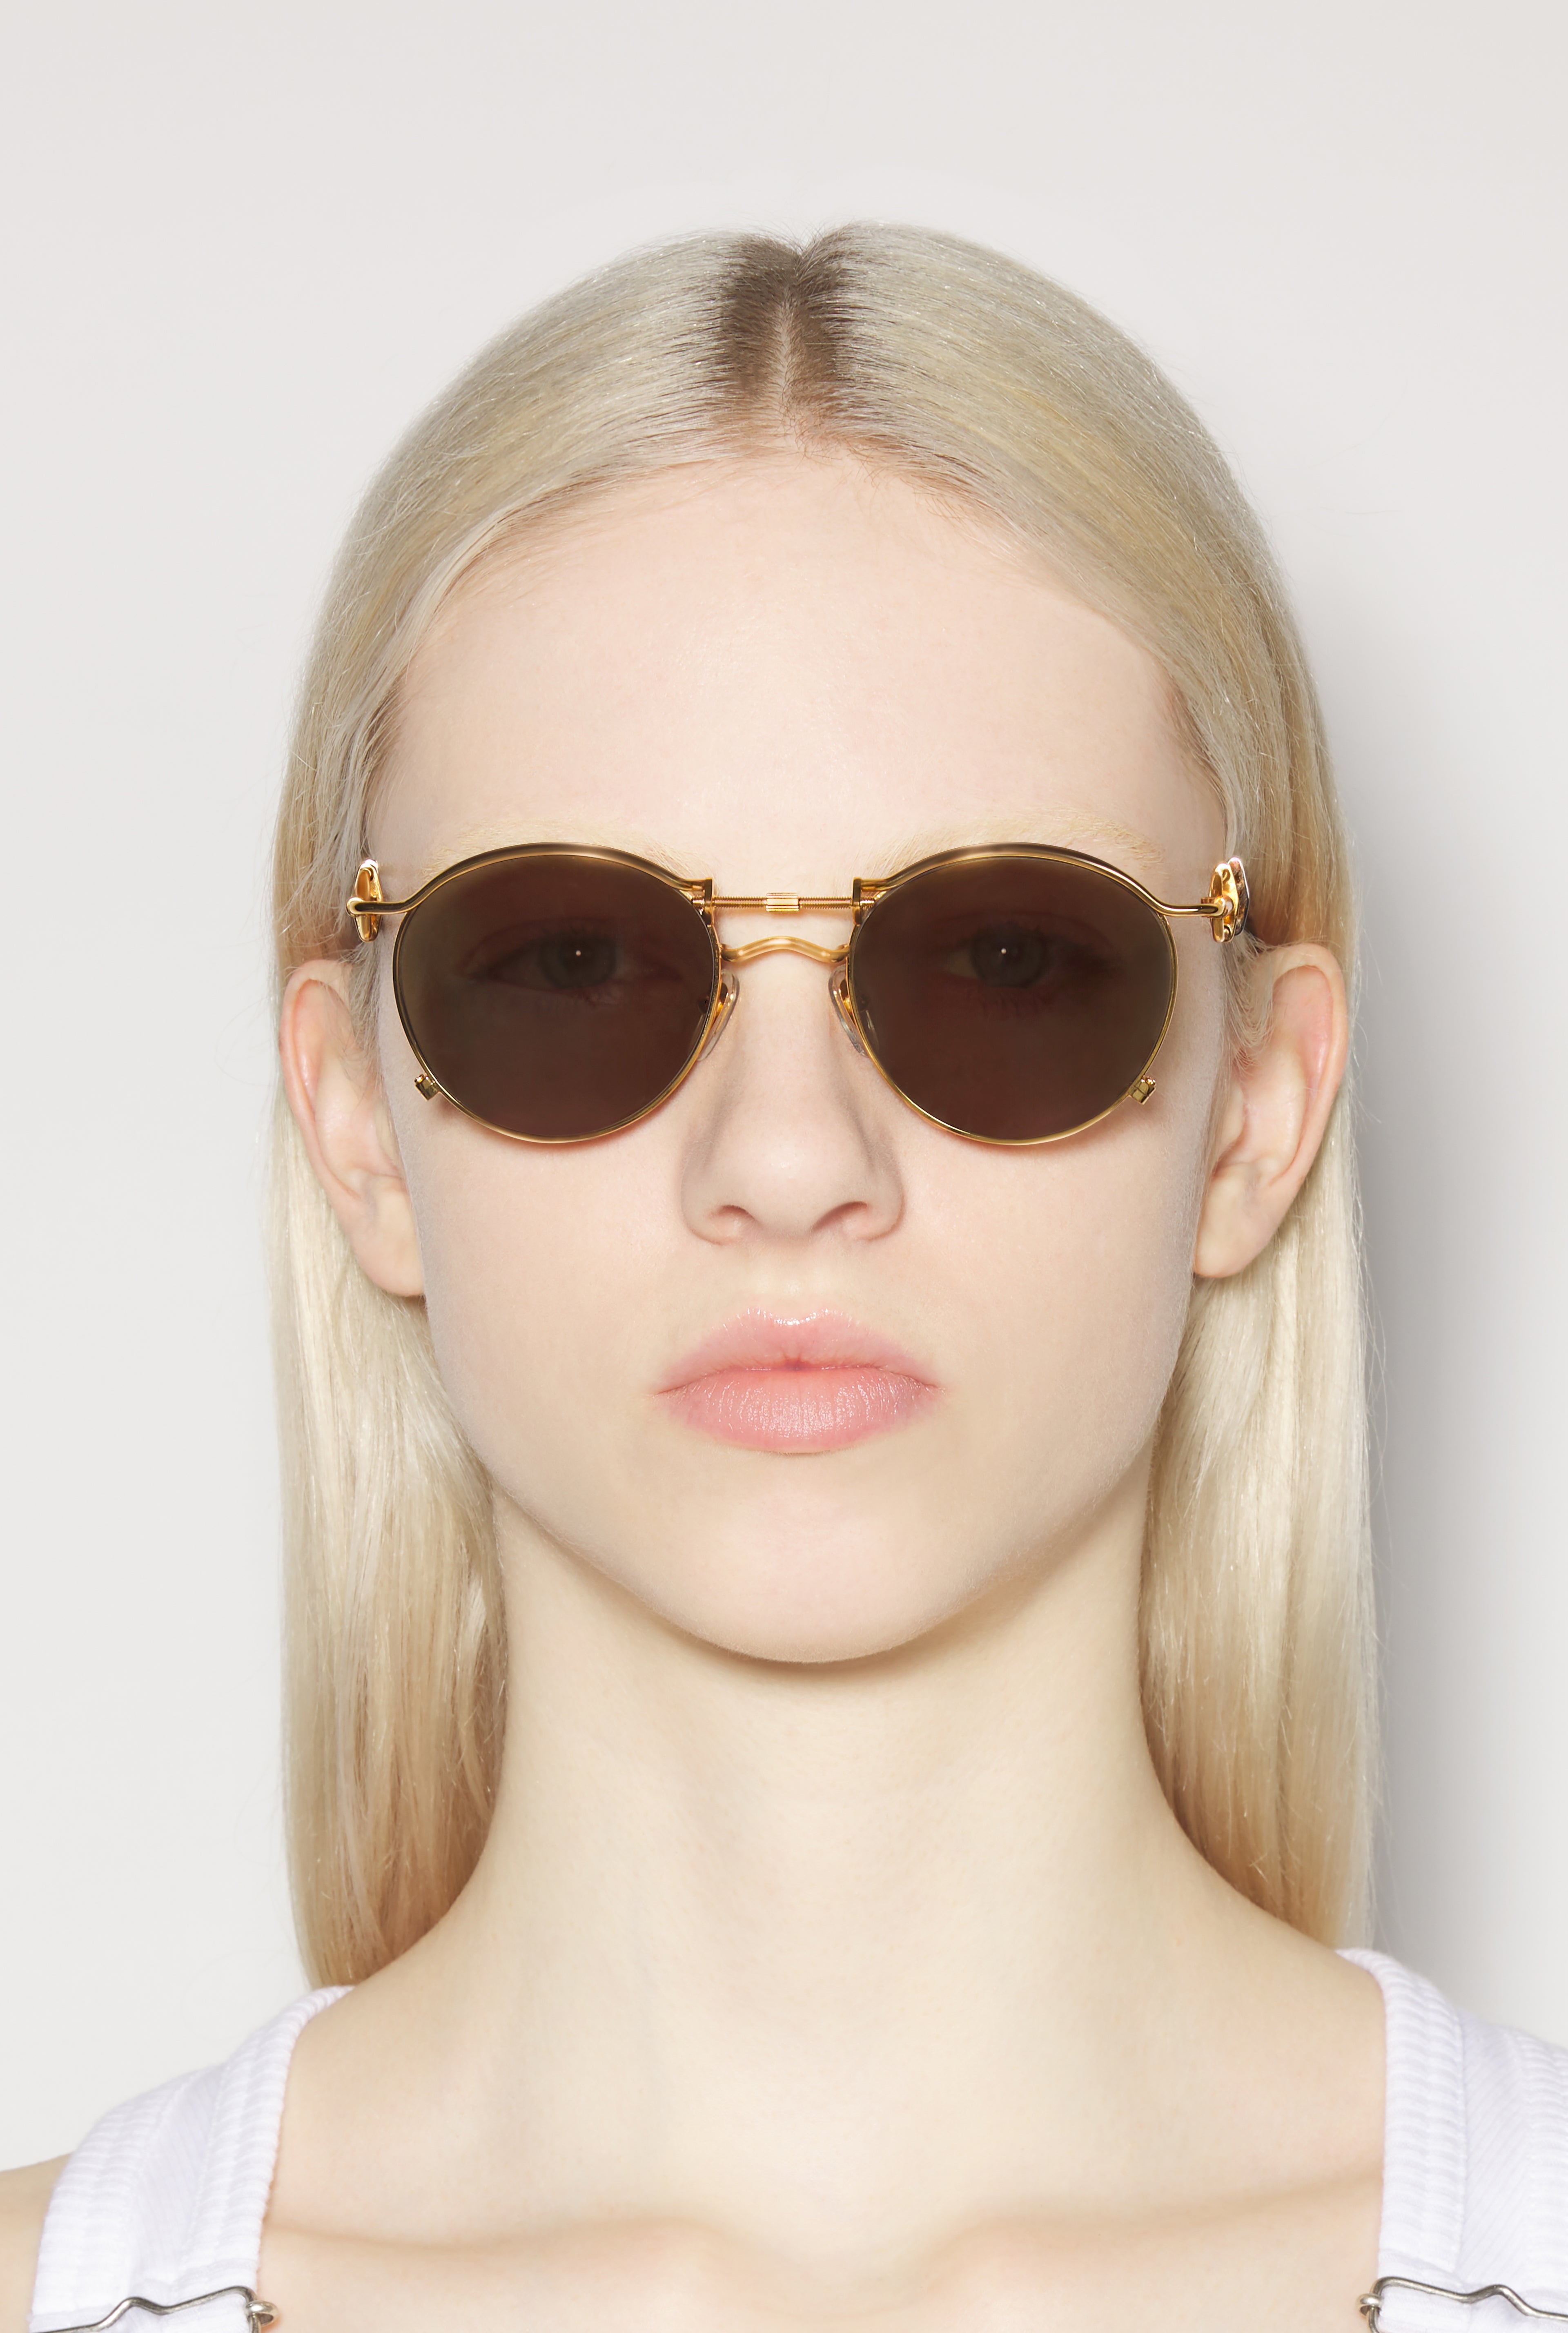 The Gold 56-0174 Sunglasses